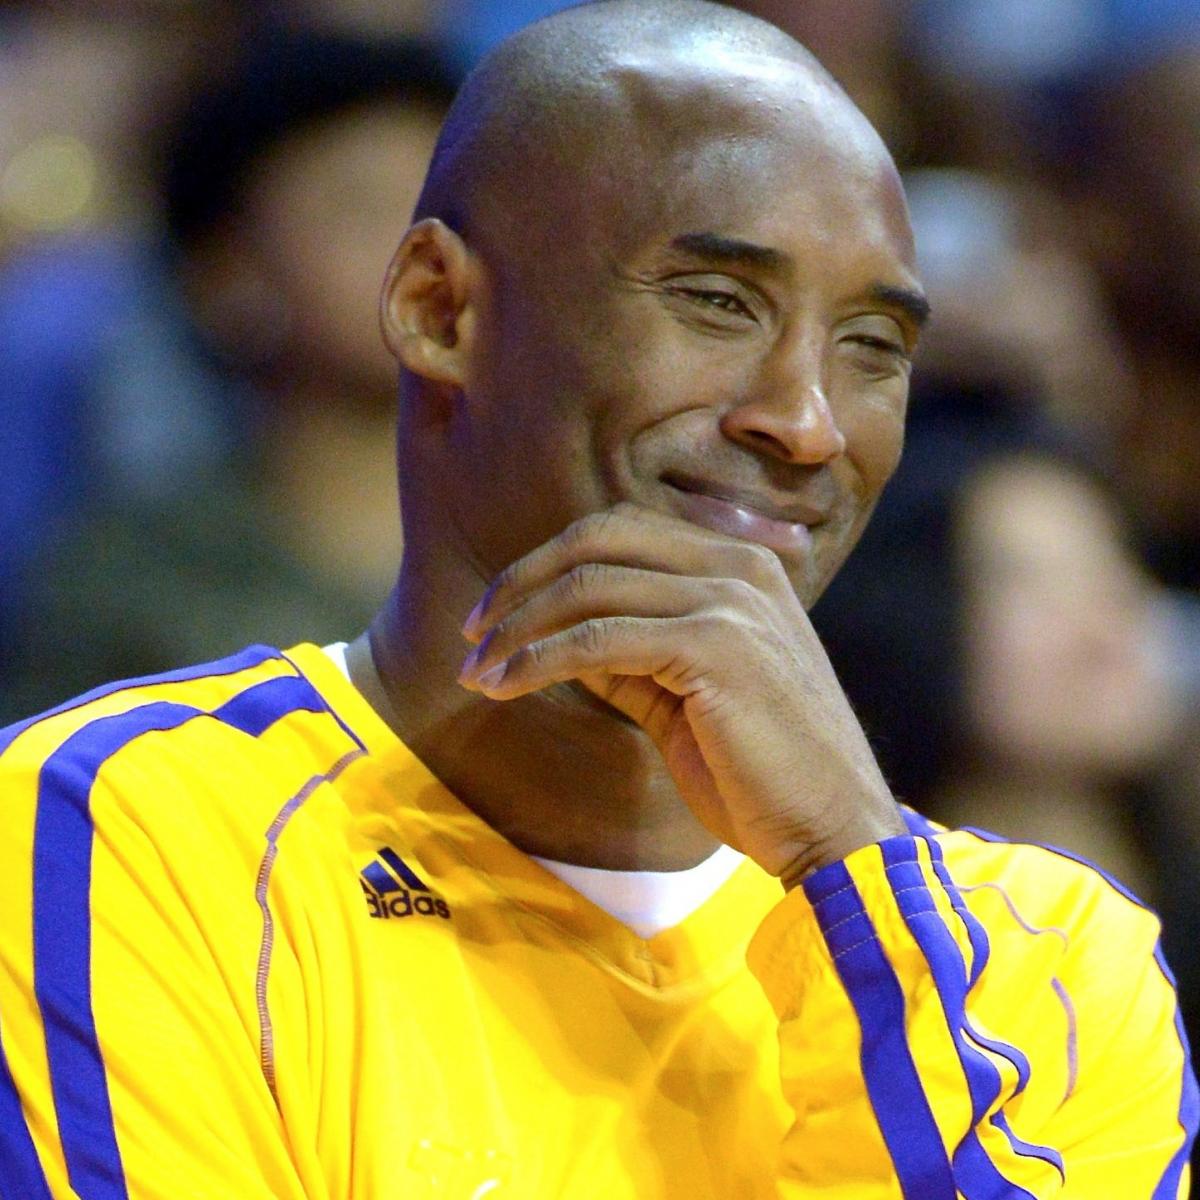 ESPN's 2013 NBA Player Rankings Puts Kobe Bryant at No. 25 Overall | Bleacher Report ...